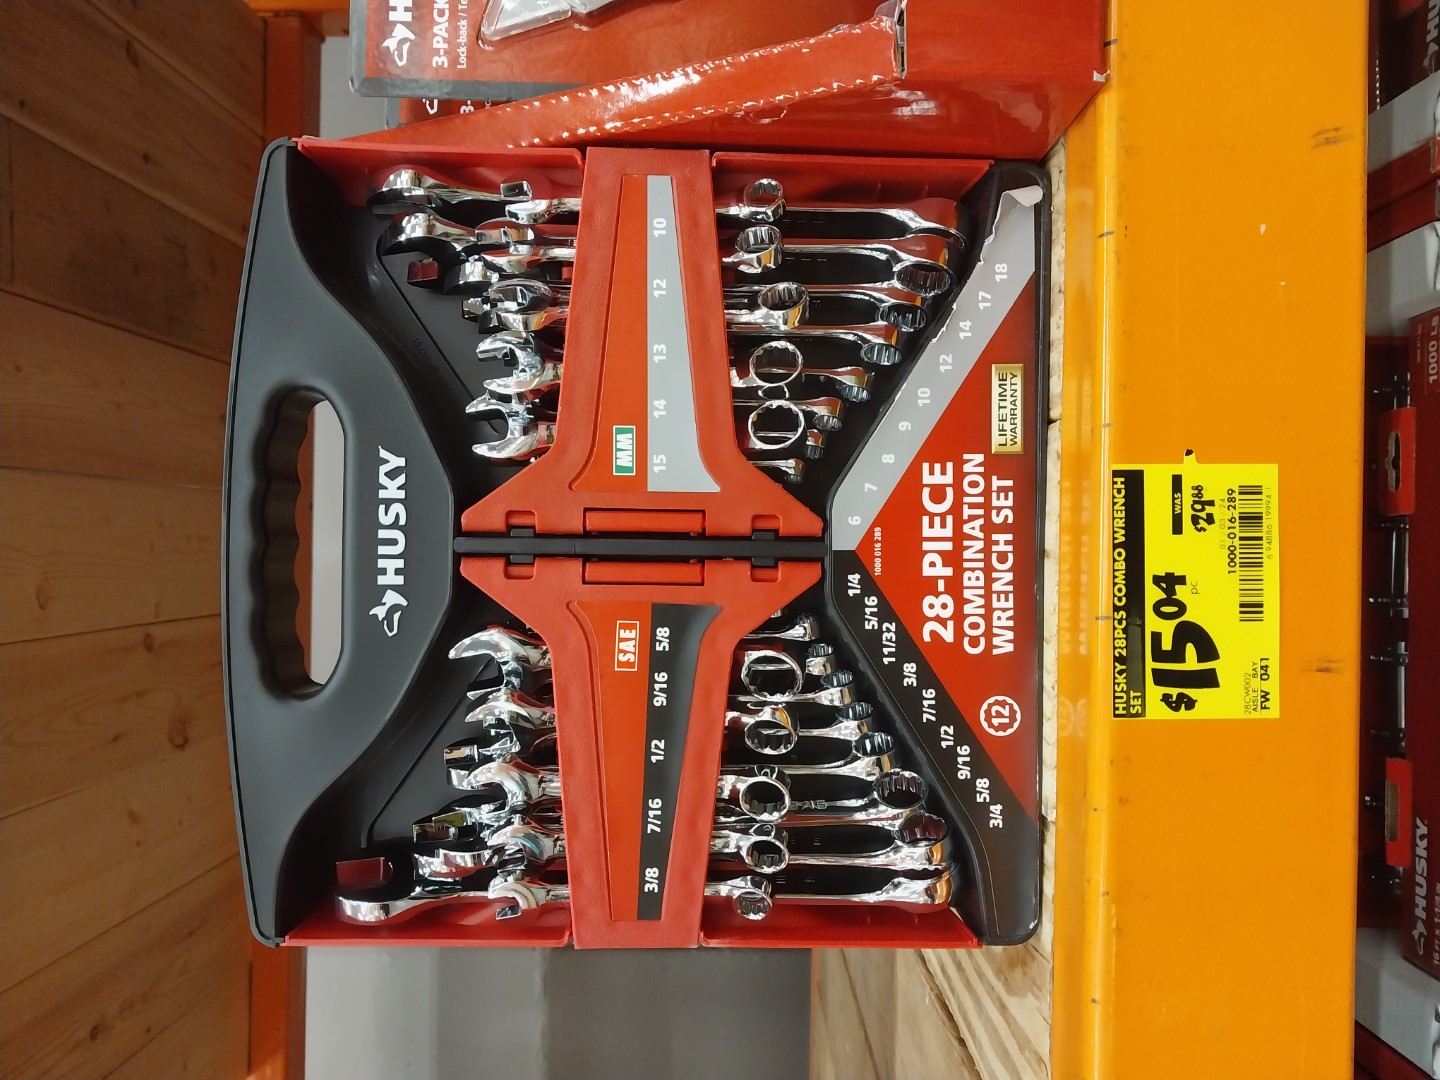 Home Depot Clearance - YMMV Husky Combination Wrench Set (28-Piece) $15.04